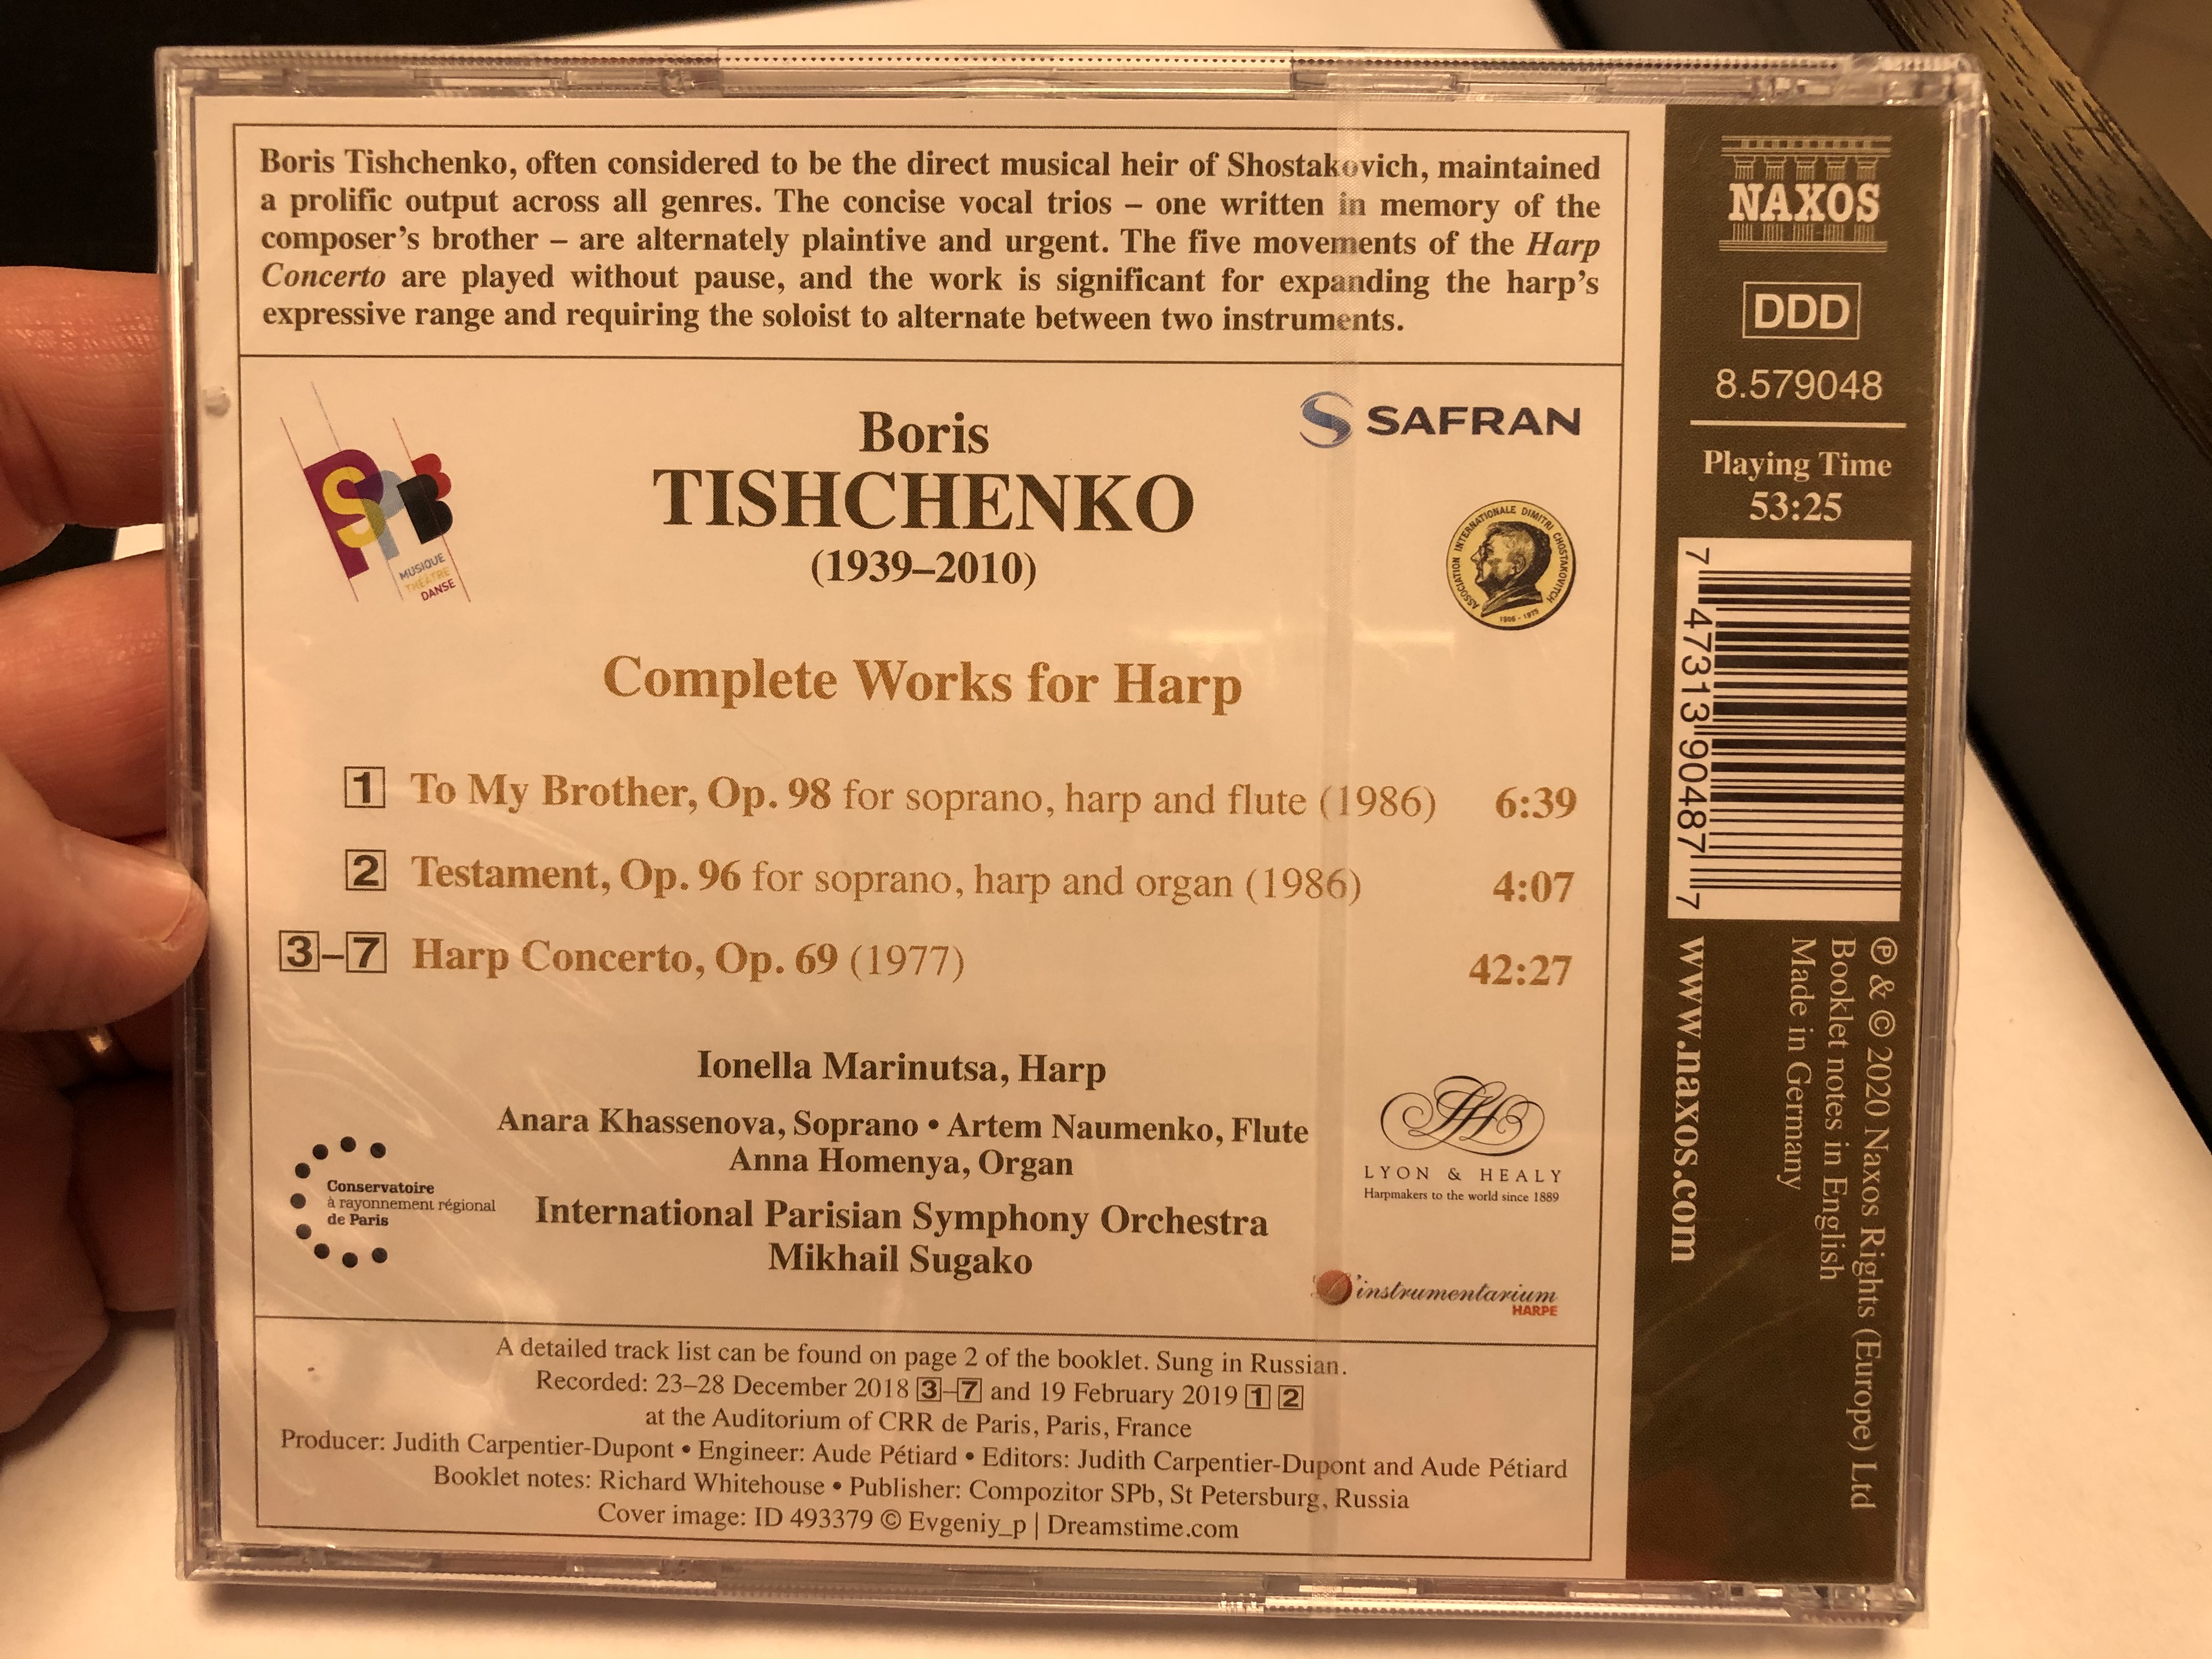 boris-tishchenko-1939-2010-harp-concerto-op.-69-to-my-brother-op.-98-testament-op.-96-ionella-marinutsa-harp-anara-khassenova-soprano-artem-naumenko-flute-anna-homenya-o.jpg